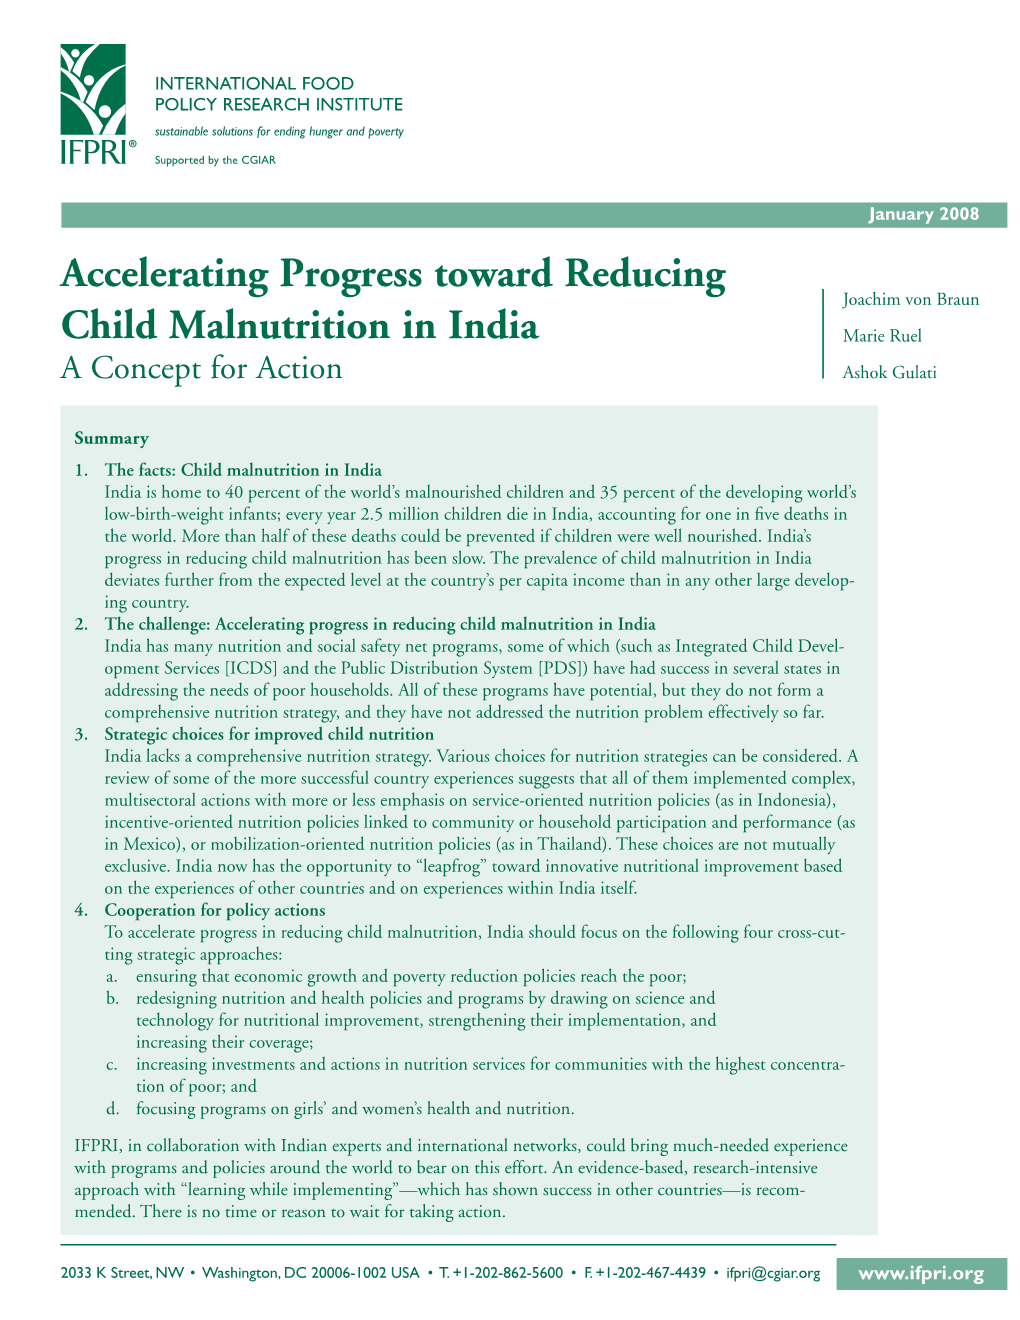 Accelerating Progress Toward Reducing Child Malnutrition in India